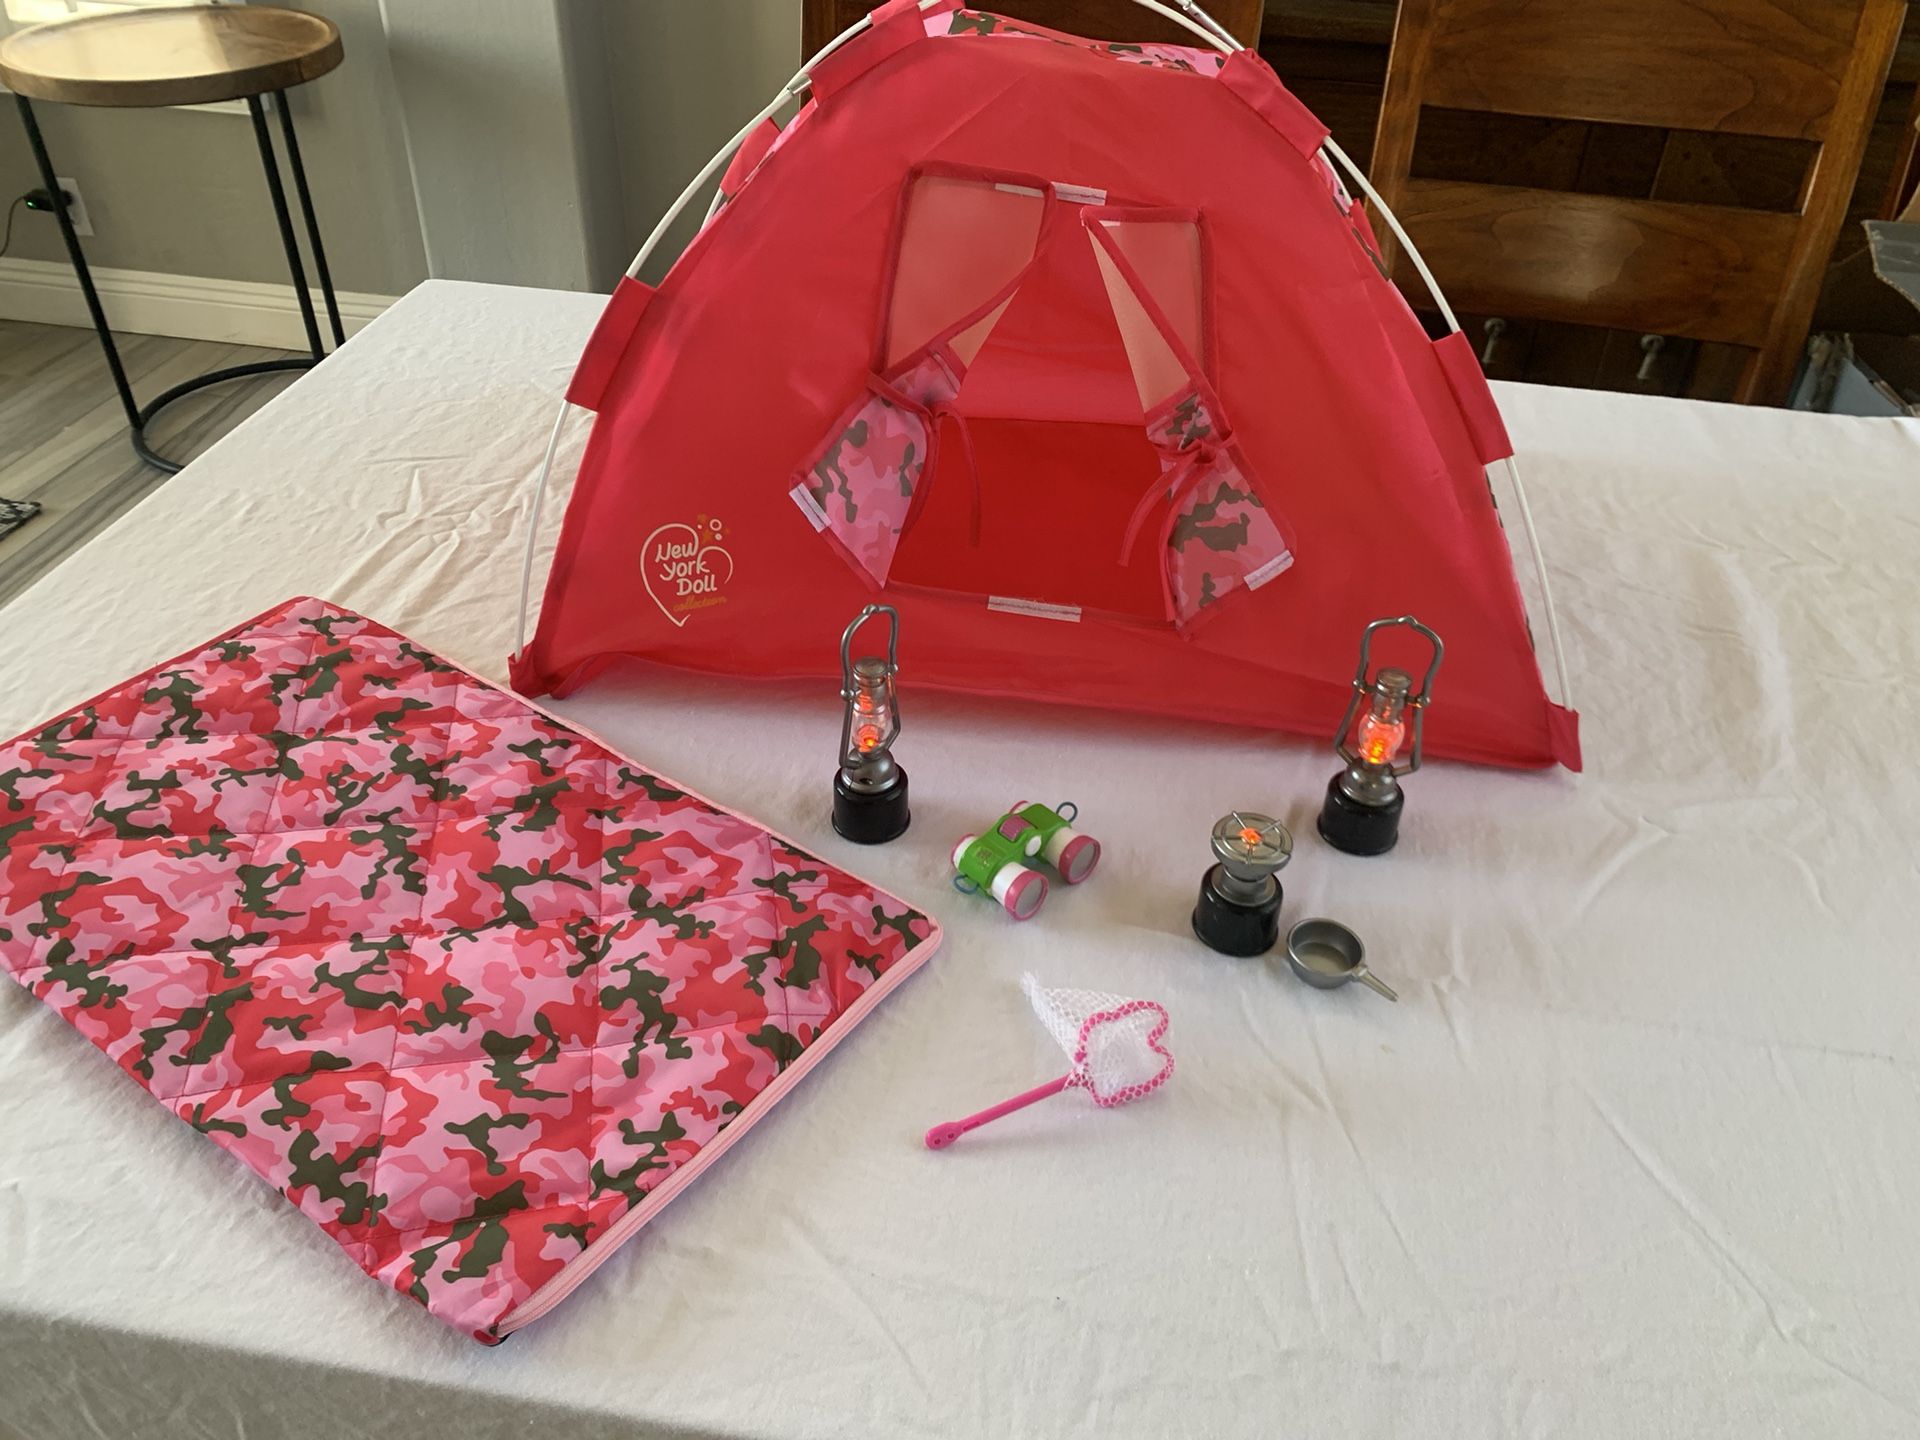 American Girl Doll Camping Set